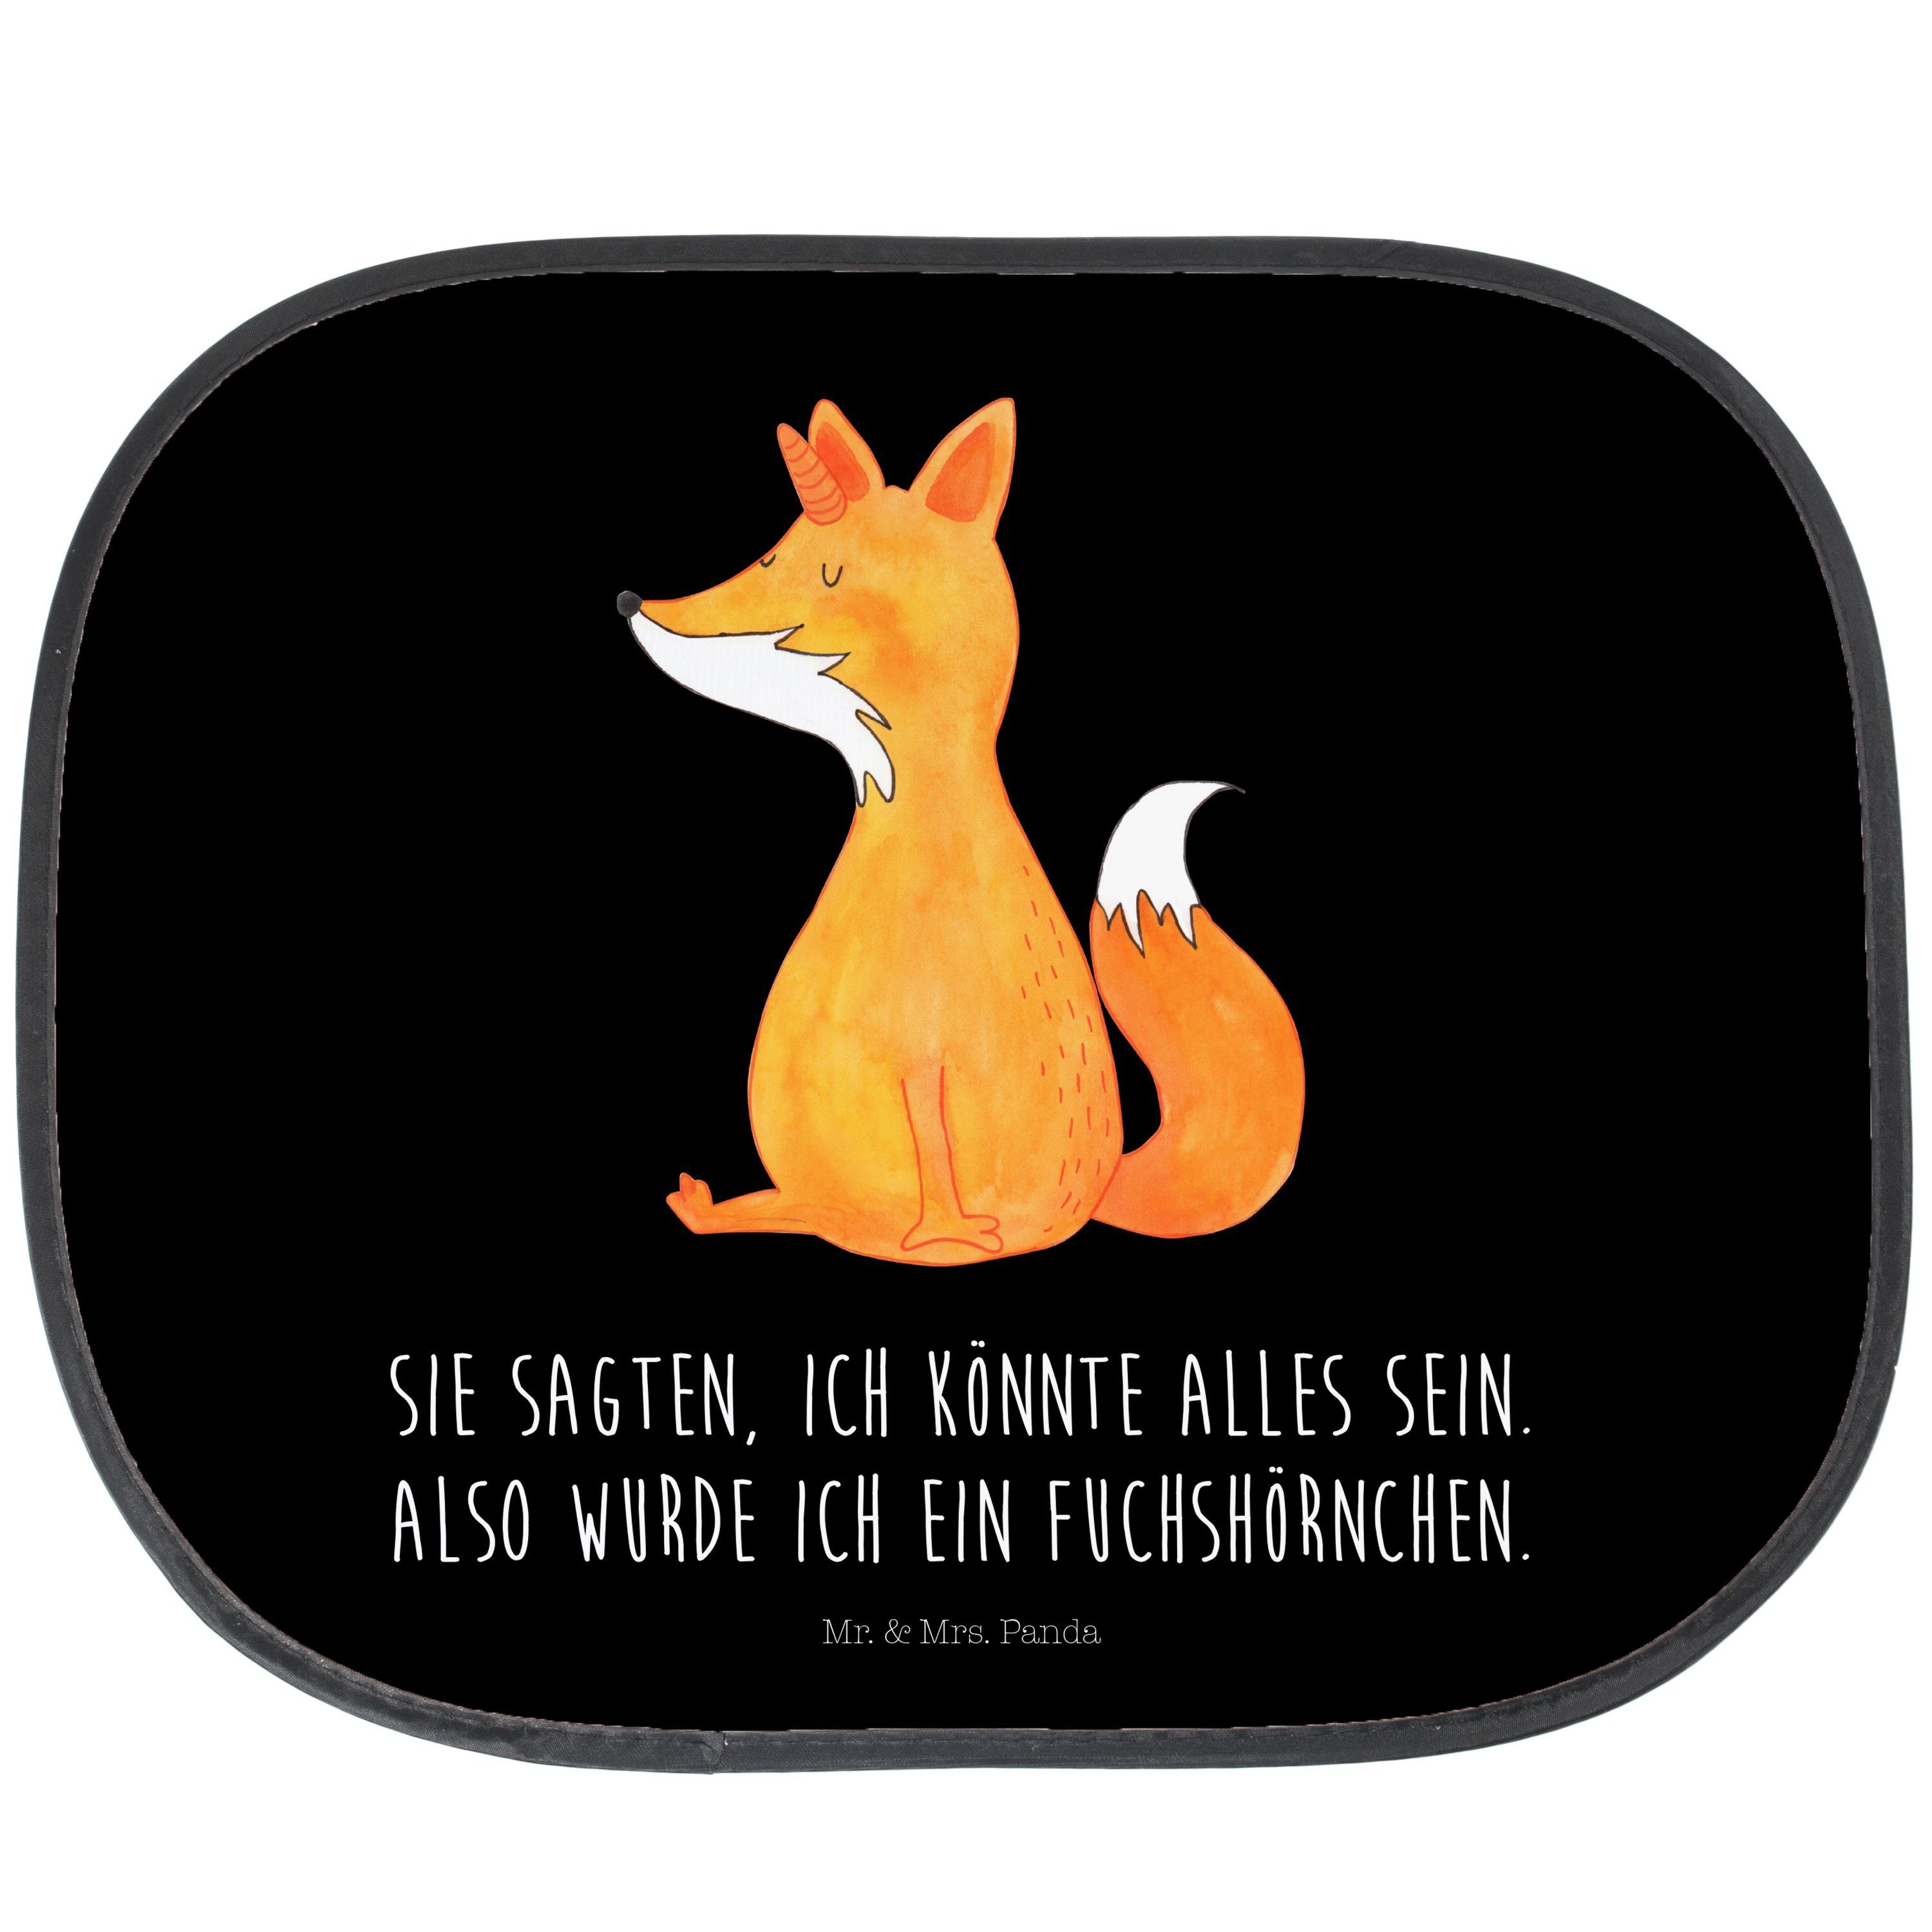 Sonnenschutz Fuchshörnchen Wunsch - Schwarz - Geschenk, Pegasus, Einhörner, Sonnen, Mr. & Mrs. Panda, Seidenmatt | Fensterfolien